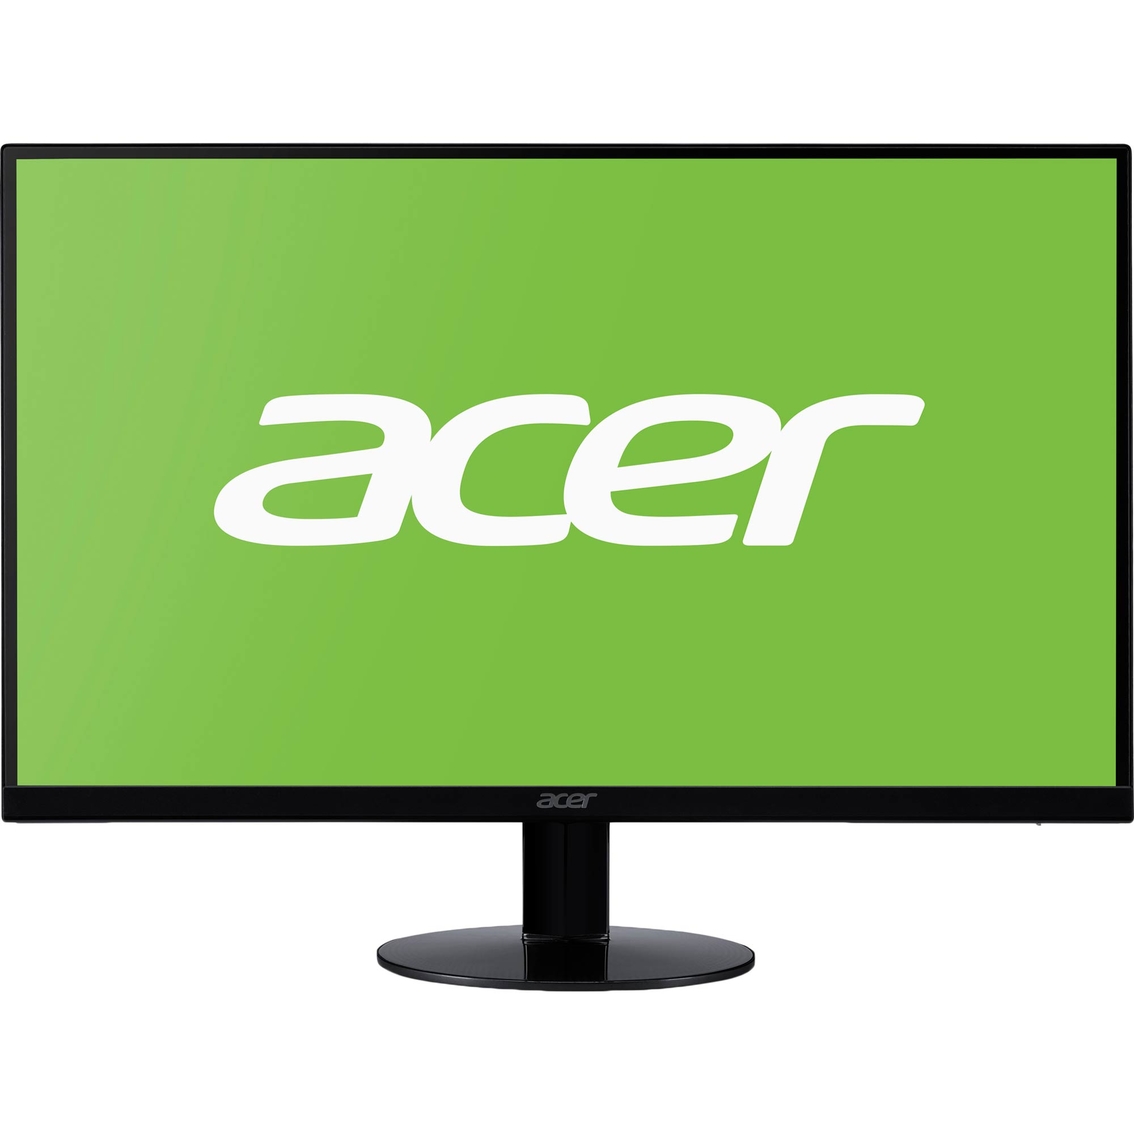 Herdenkings voorstel Bewust Acer Bbix 27 In. Full Hd Led Monitor | Computer Monitors | Home Office &  School | Shop The Exchange